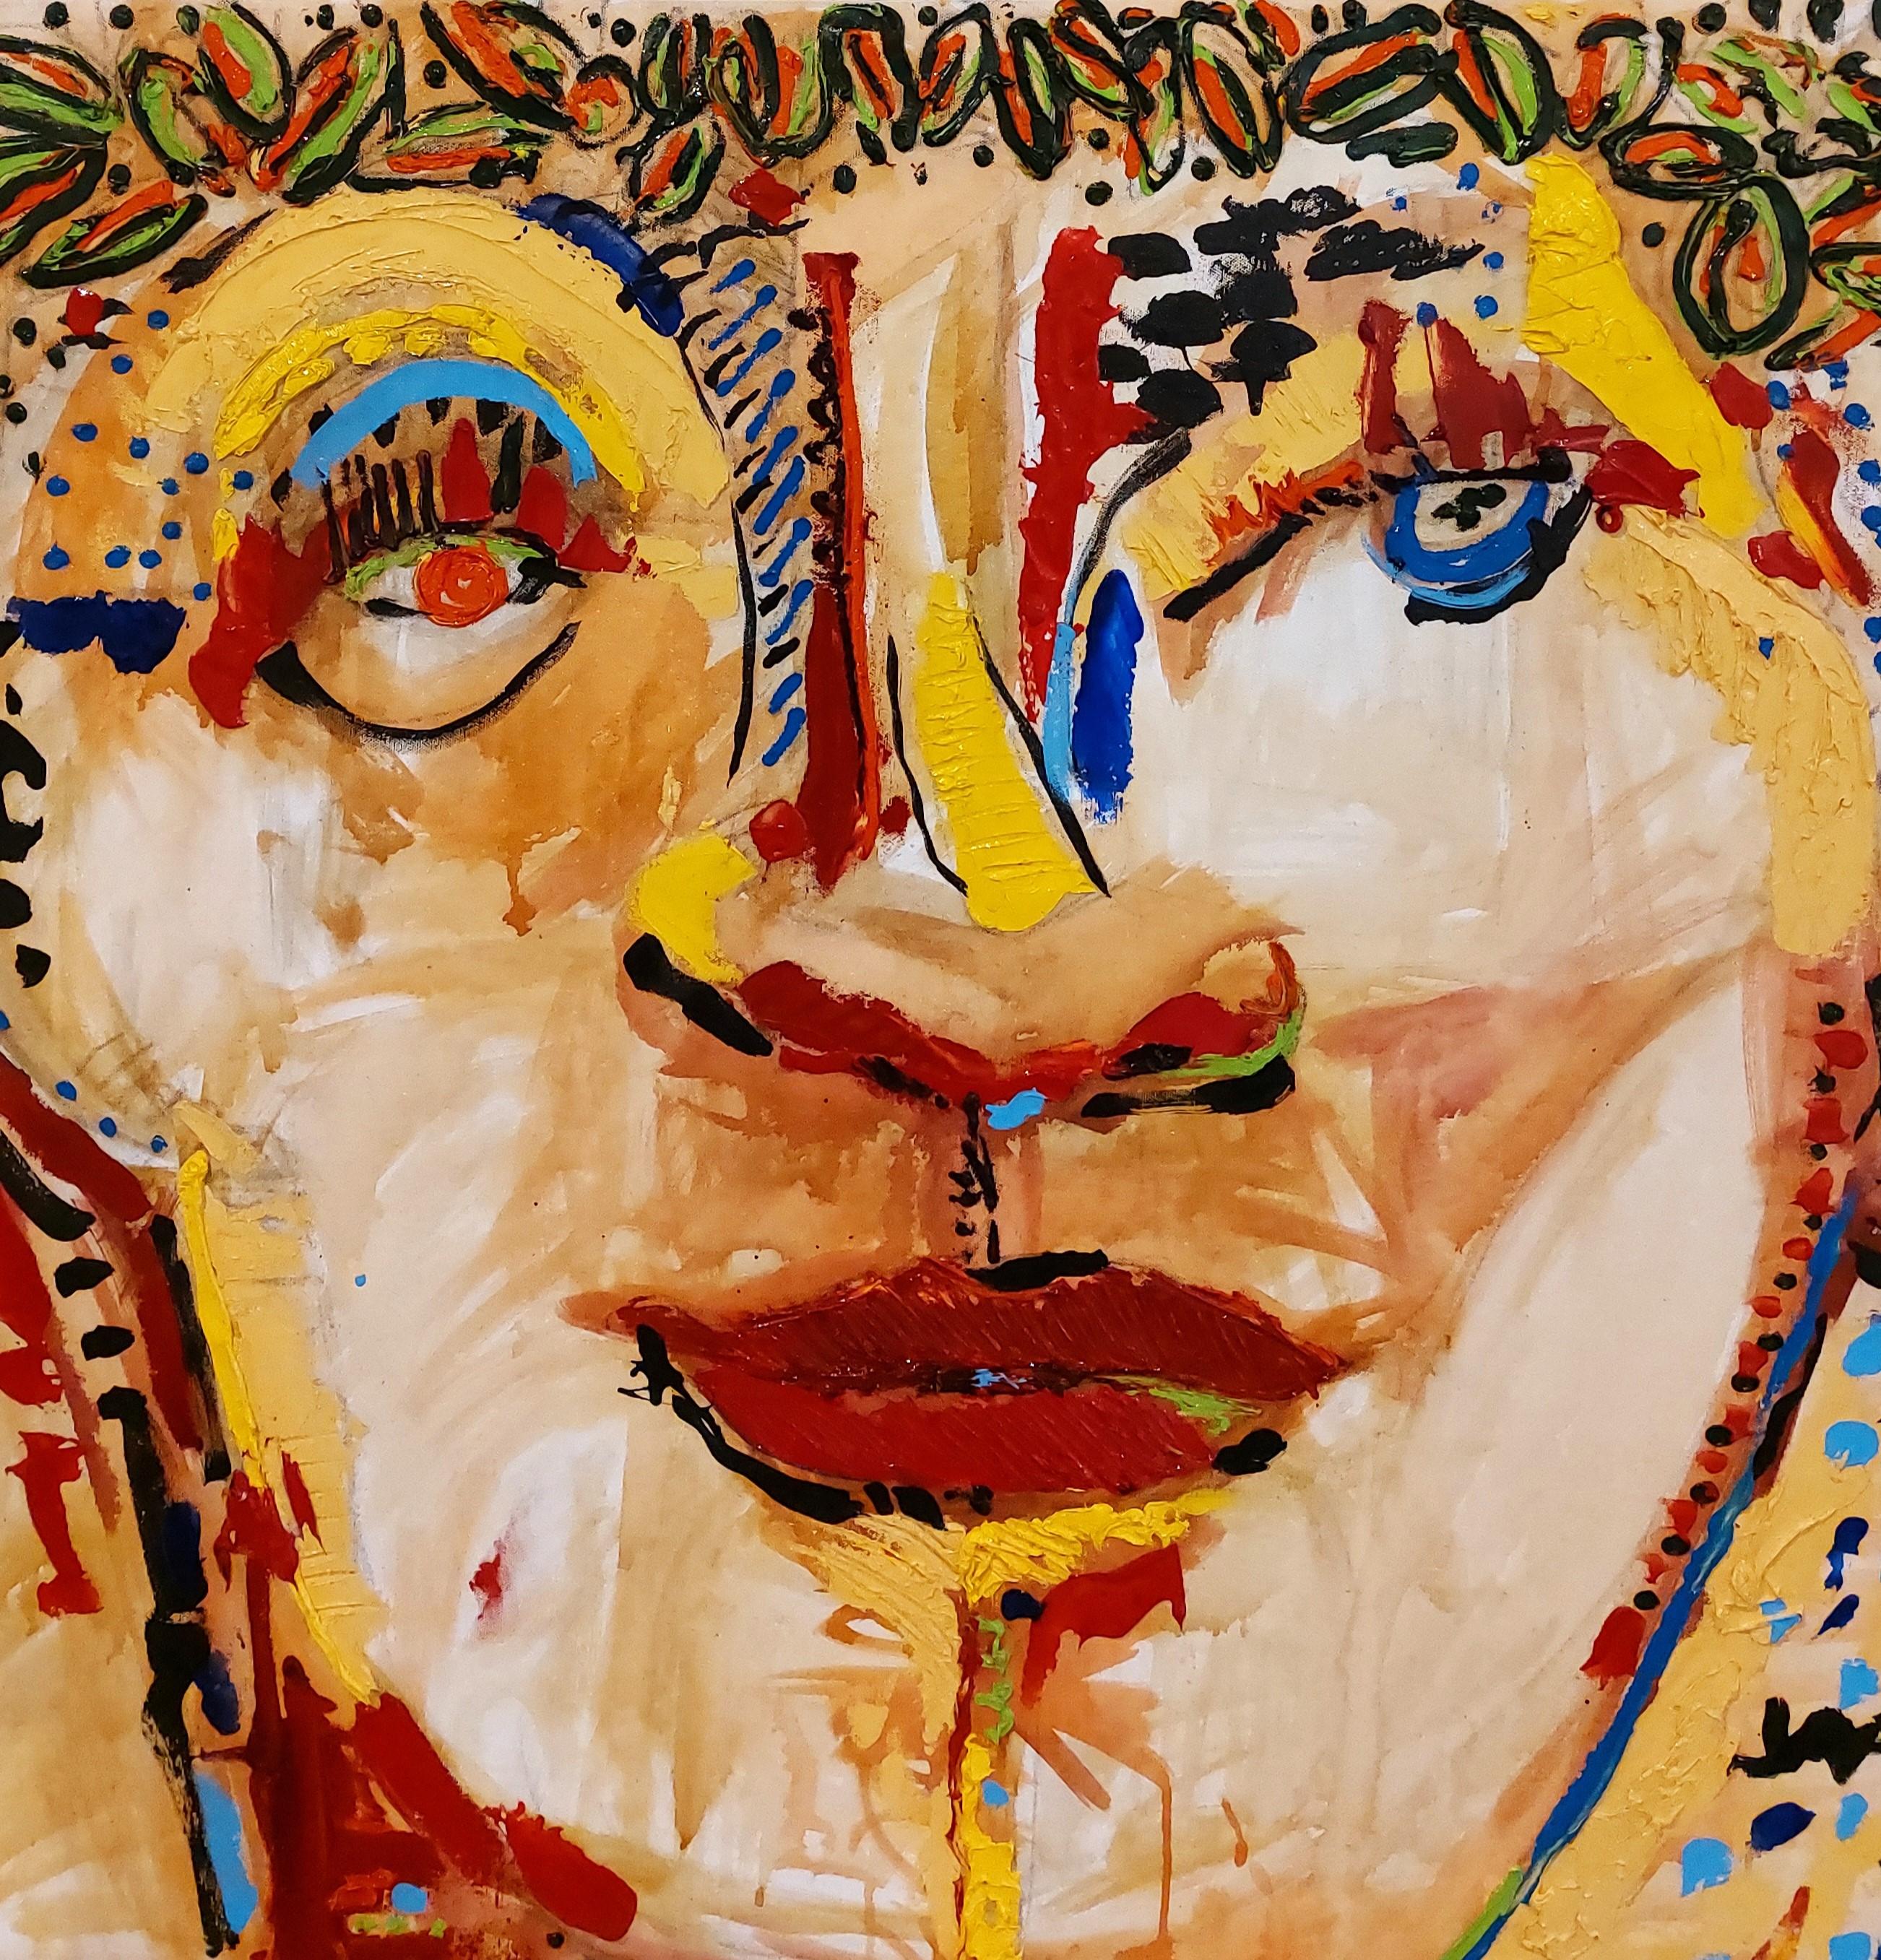 OTERO, oil on canvas, 120 cm x 120 cm